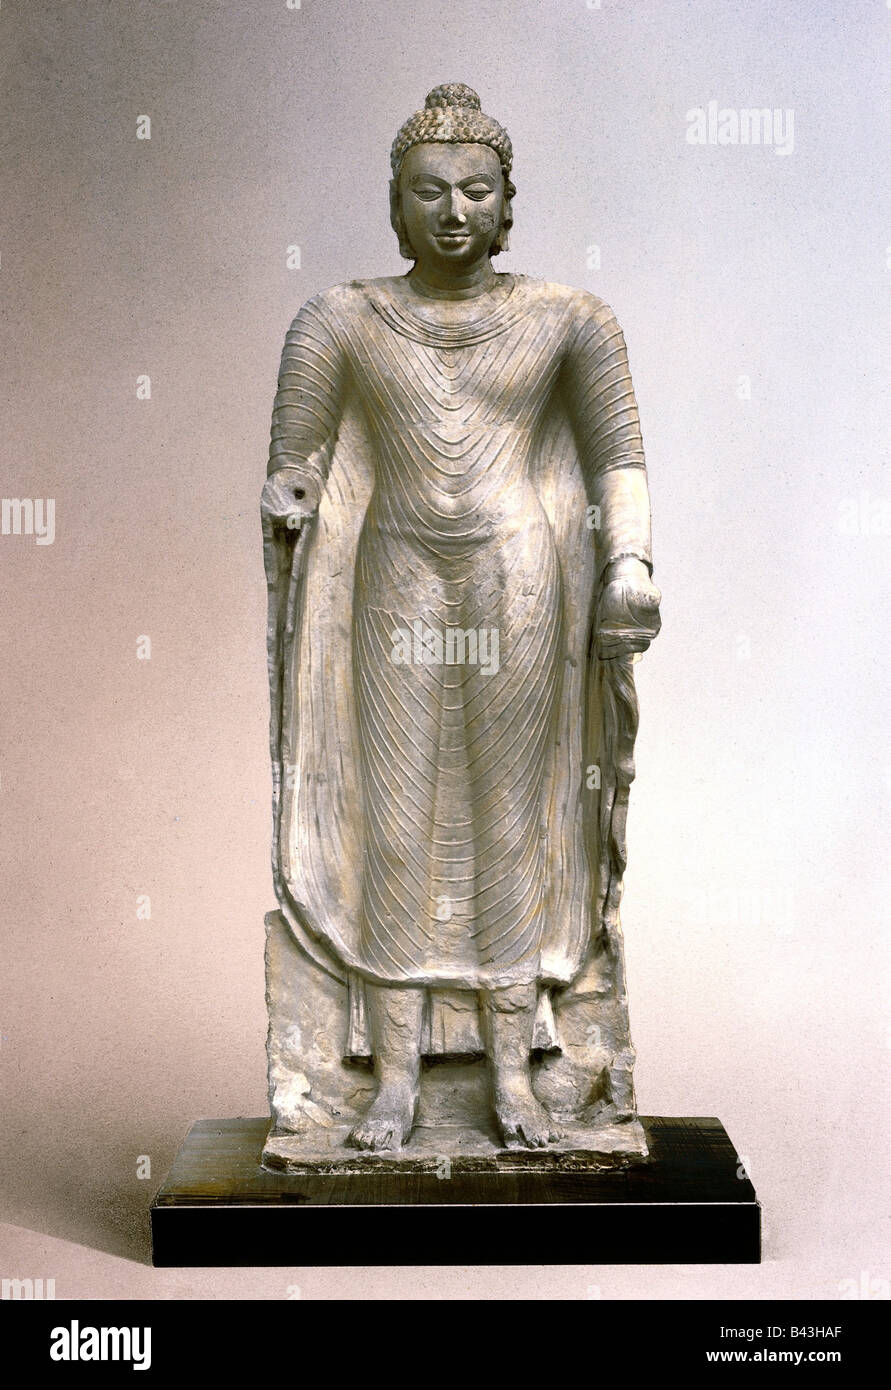 Buda, príncipe Siddharta Gautama, 557 - 447 a.C., fundador indio del budismo, estatua, Buda de pie, período Gupta (siglo IV - VI d.C.), siglo V circa, , Foto de stock